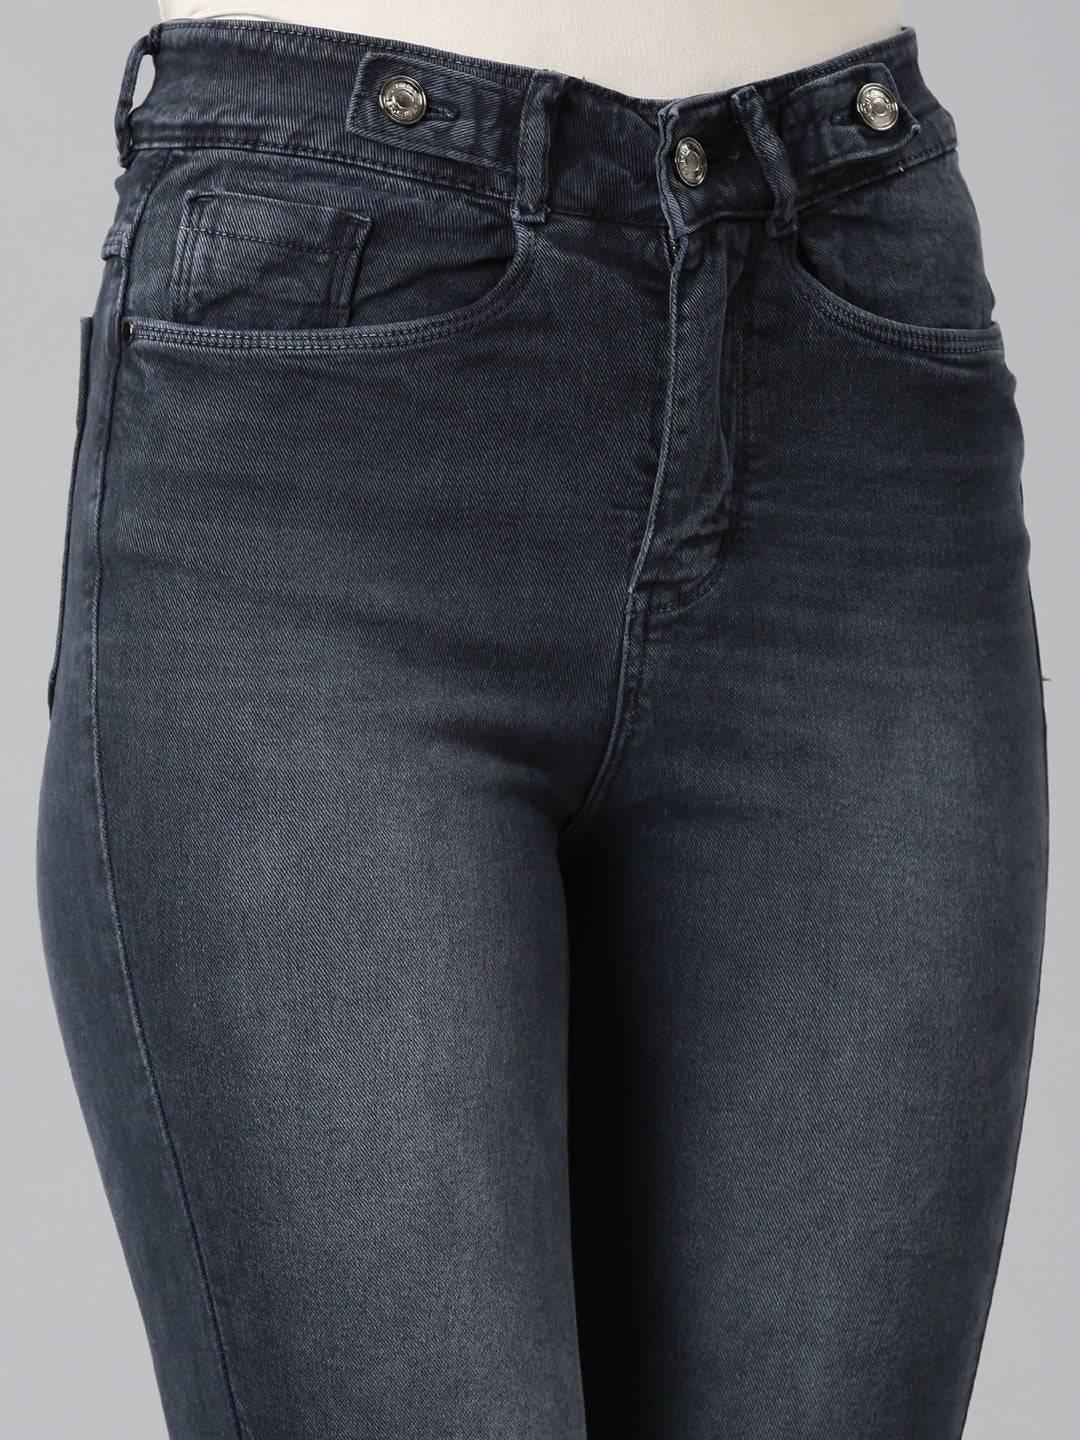 Women Grey Solid Flared Denim Jeans